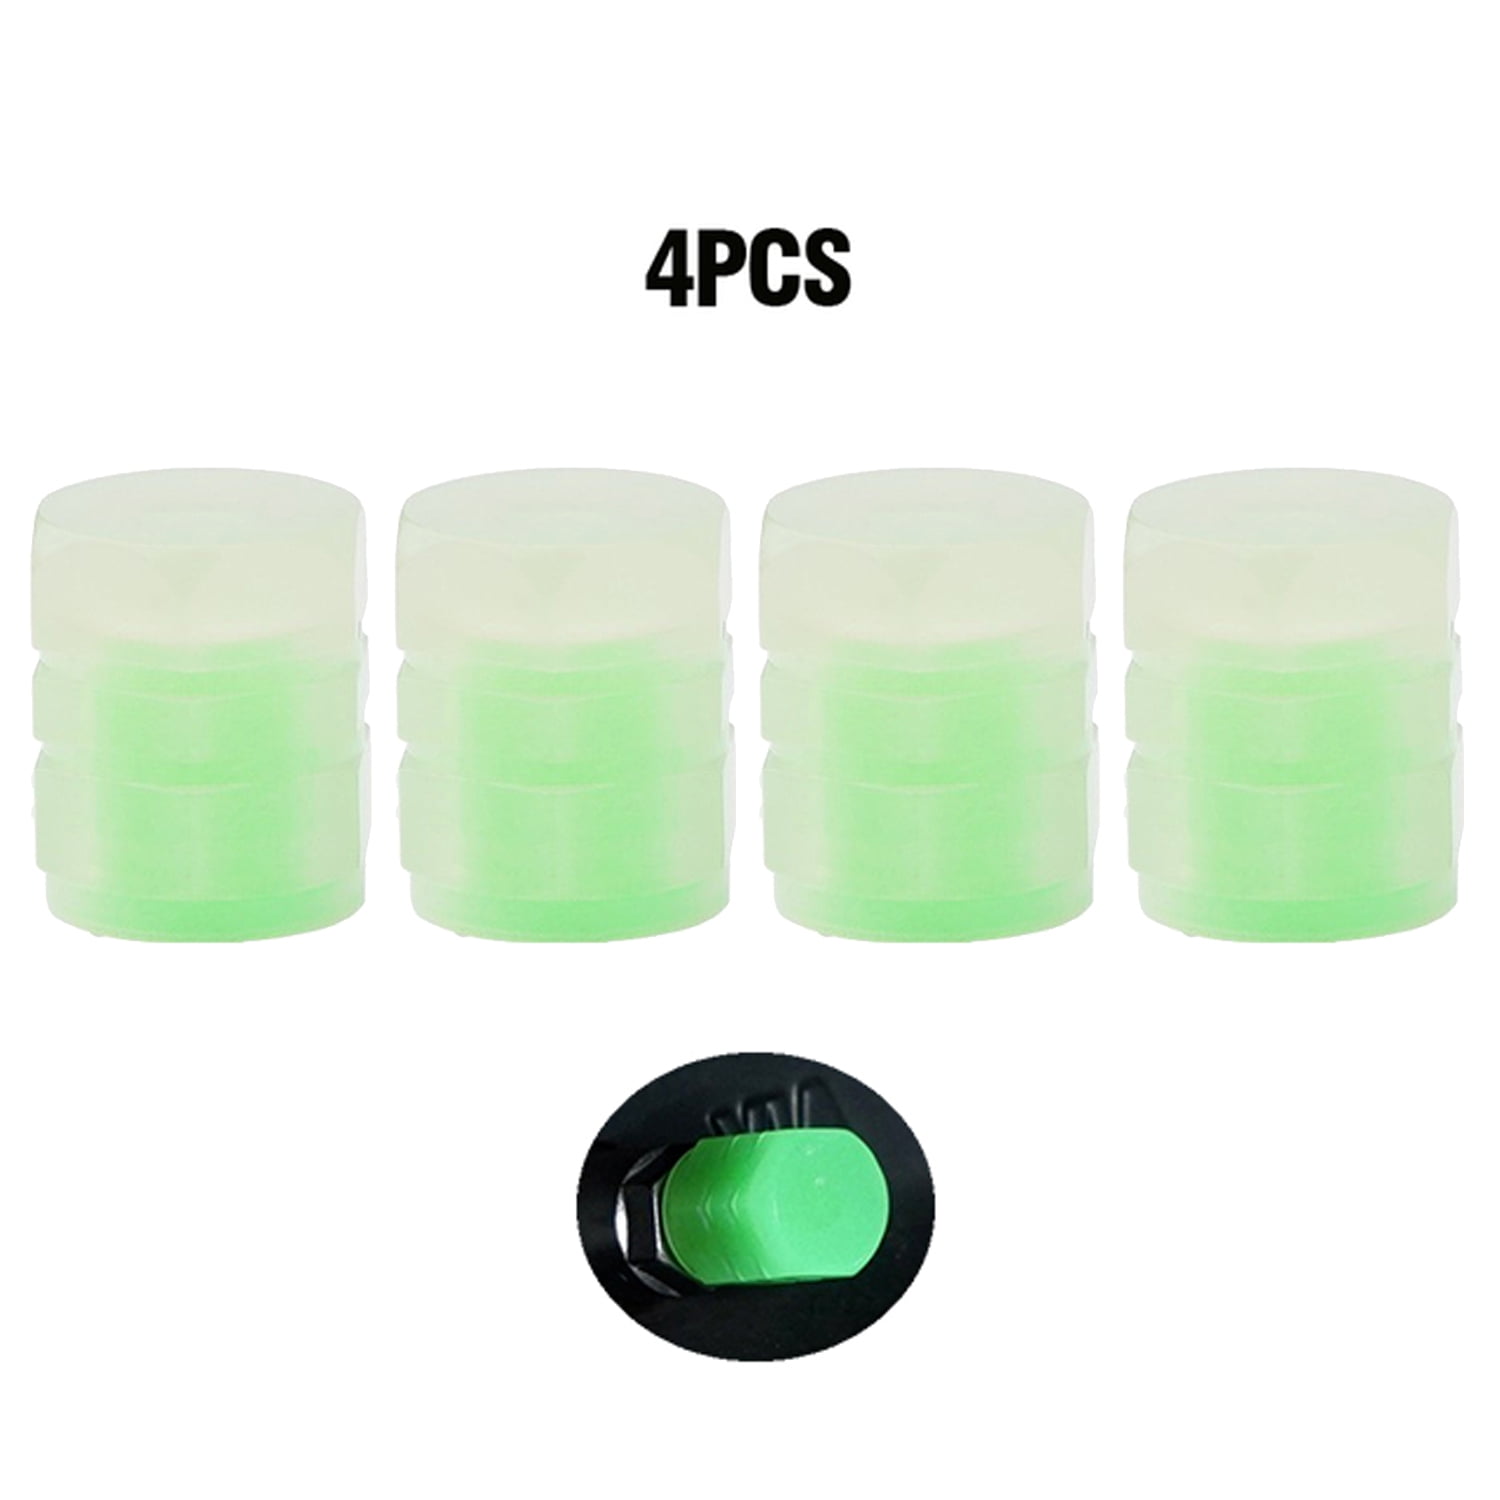 Homel 4Pcs/Set Luminous Valve Cap Plastic ABS Dust-proof